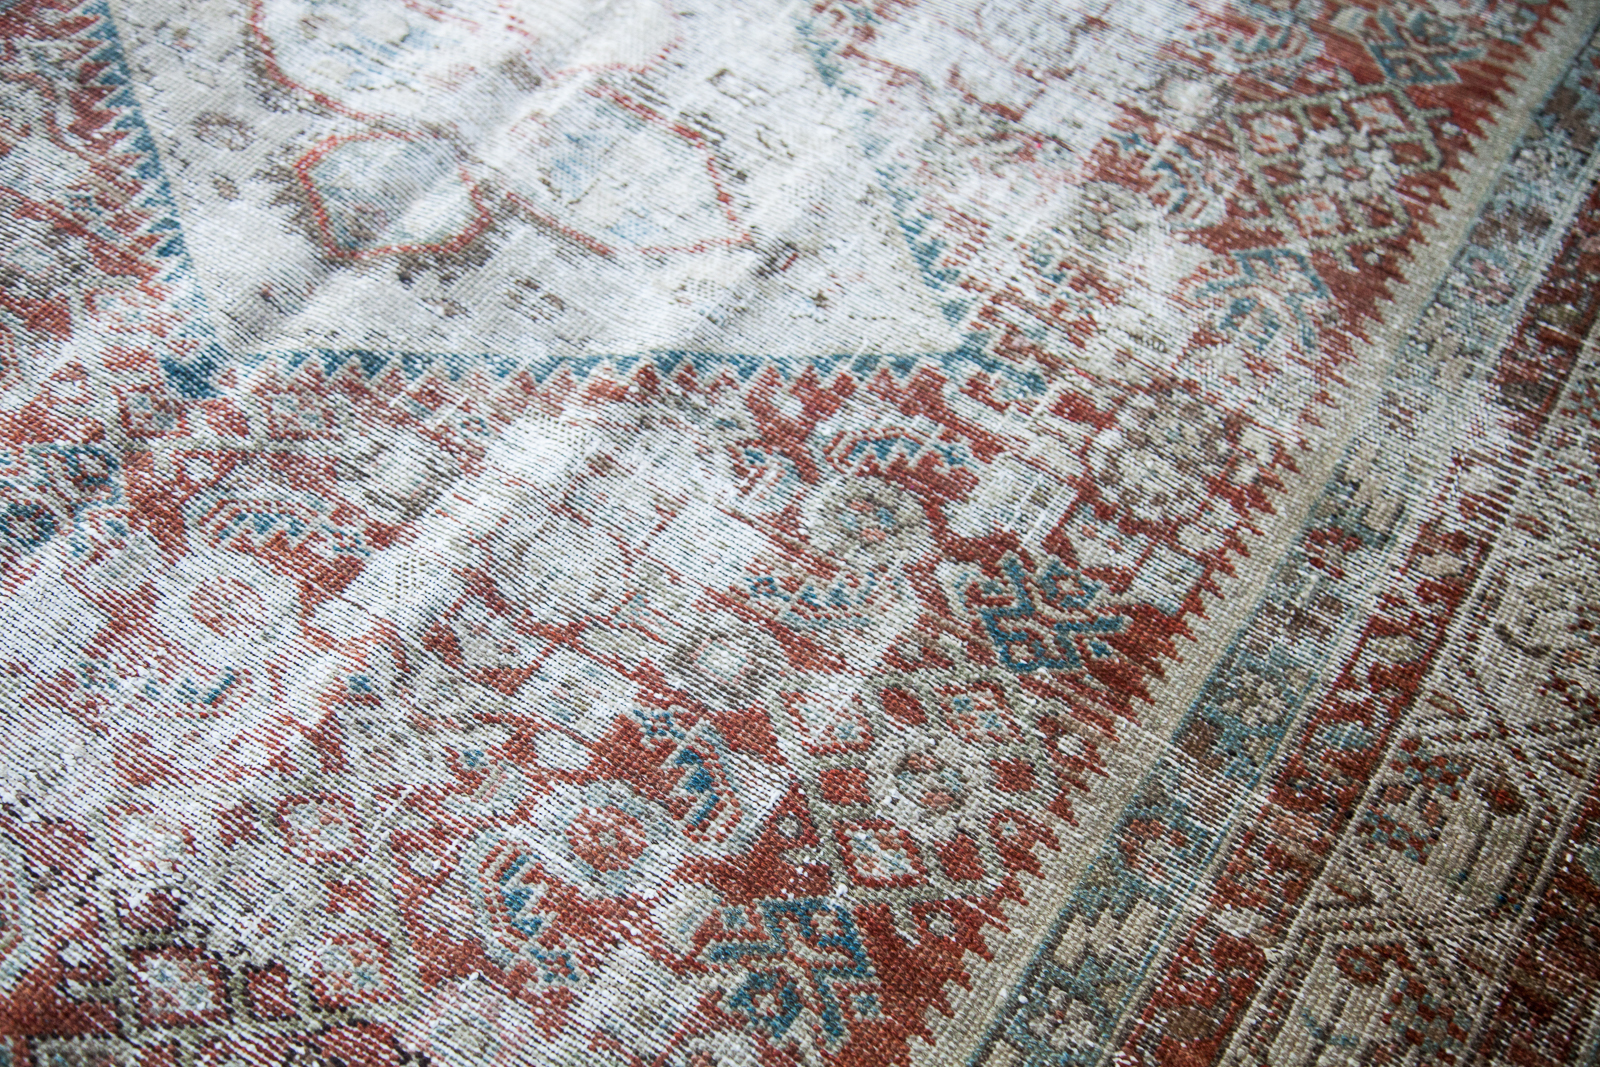 Vintage Persian Carpet